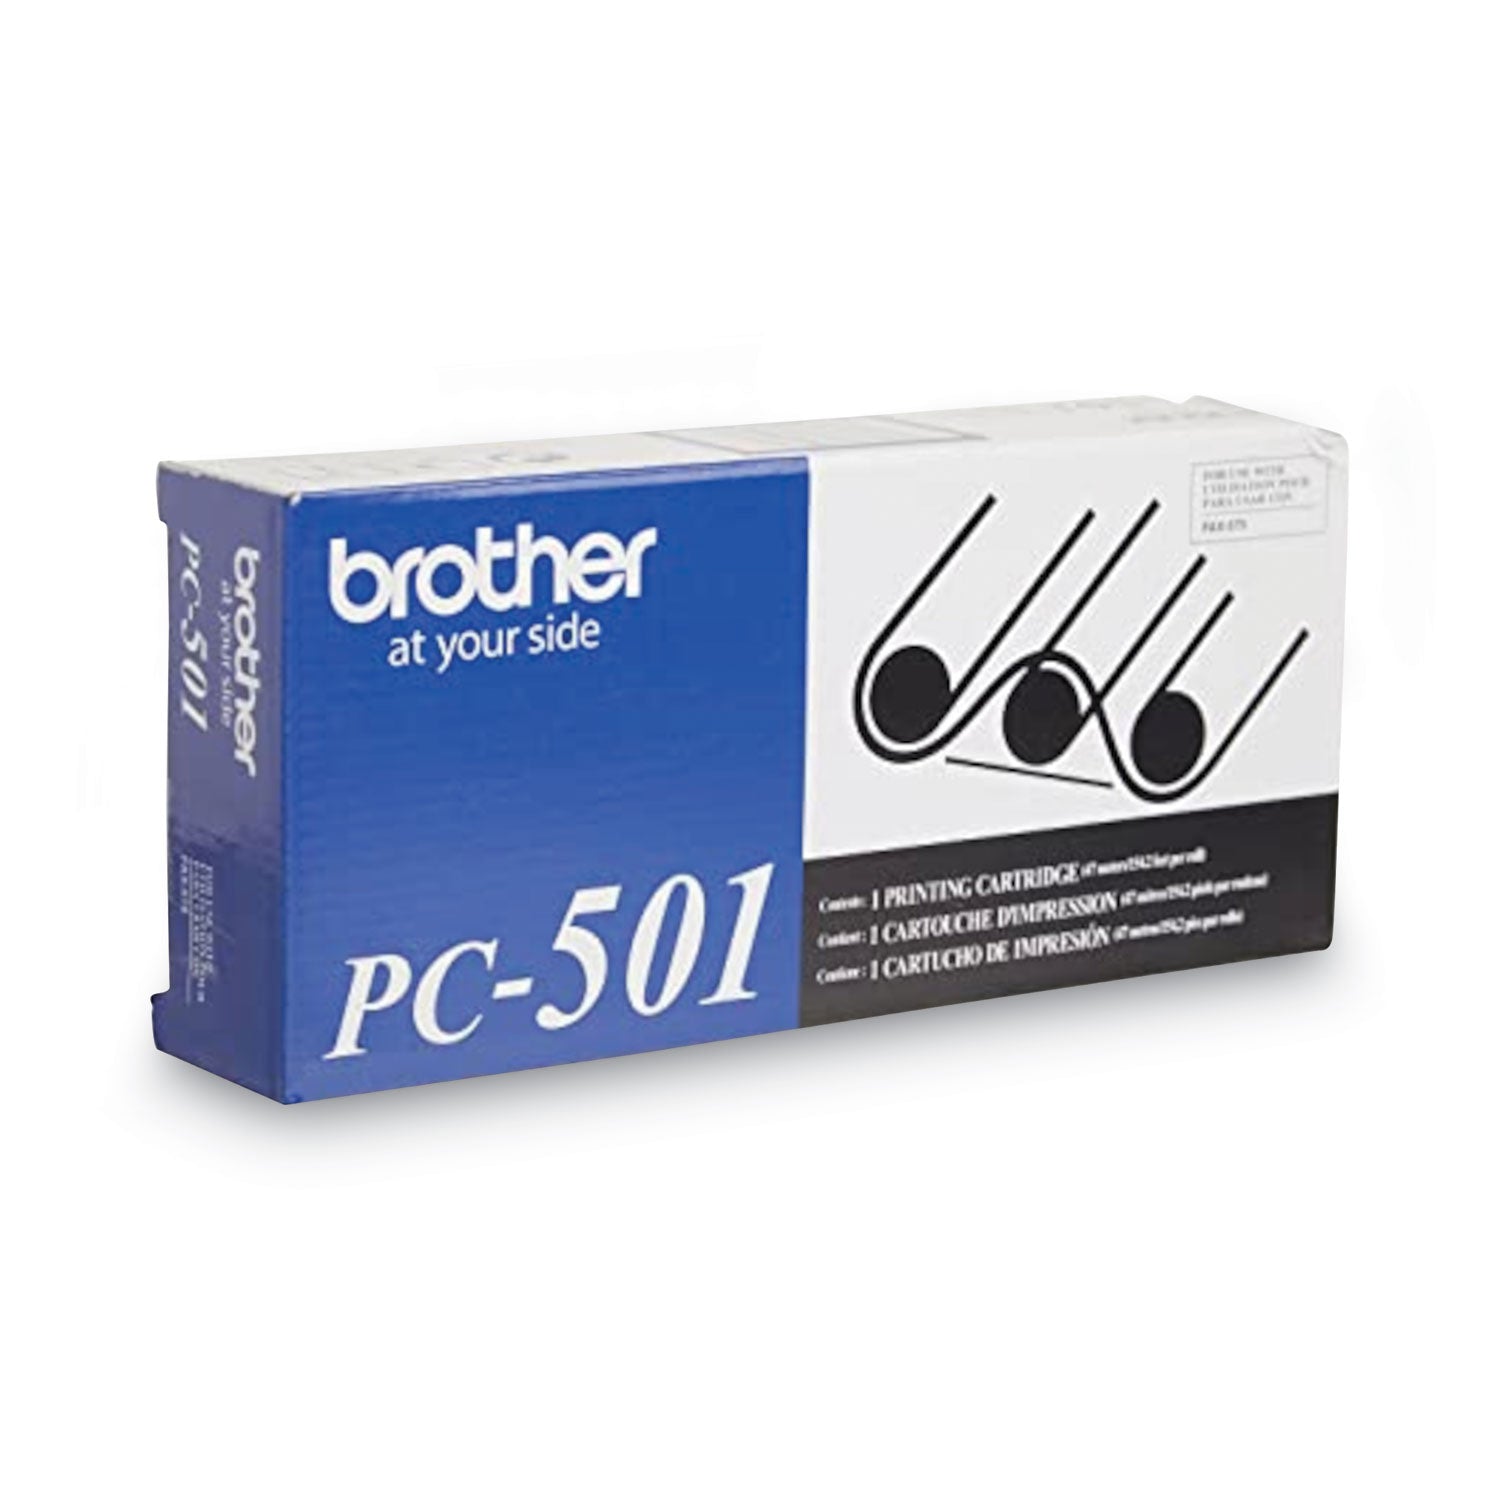 PC-501 Thermal Transfer Print Cartridge, 150 Page-Yield, Black - 